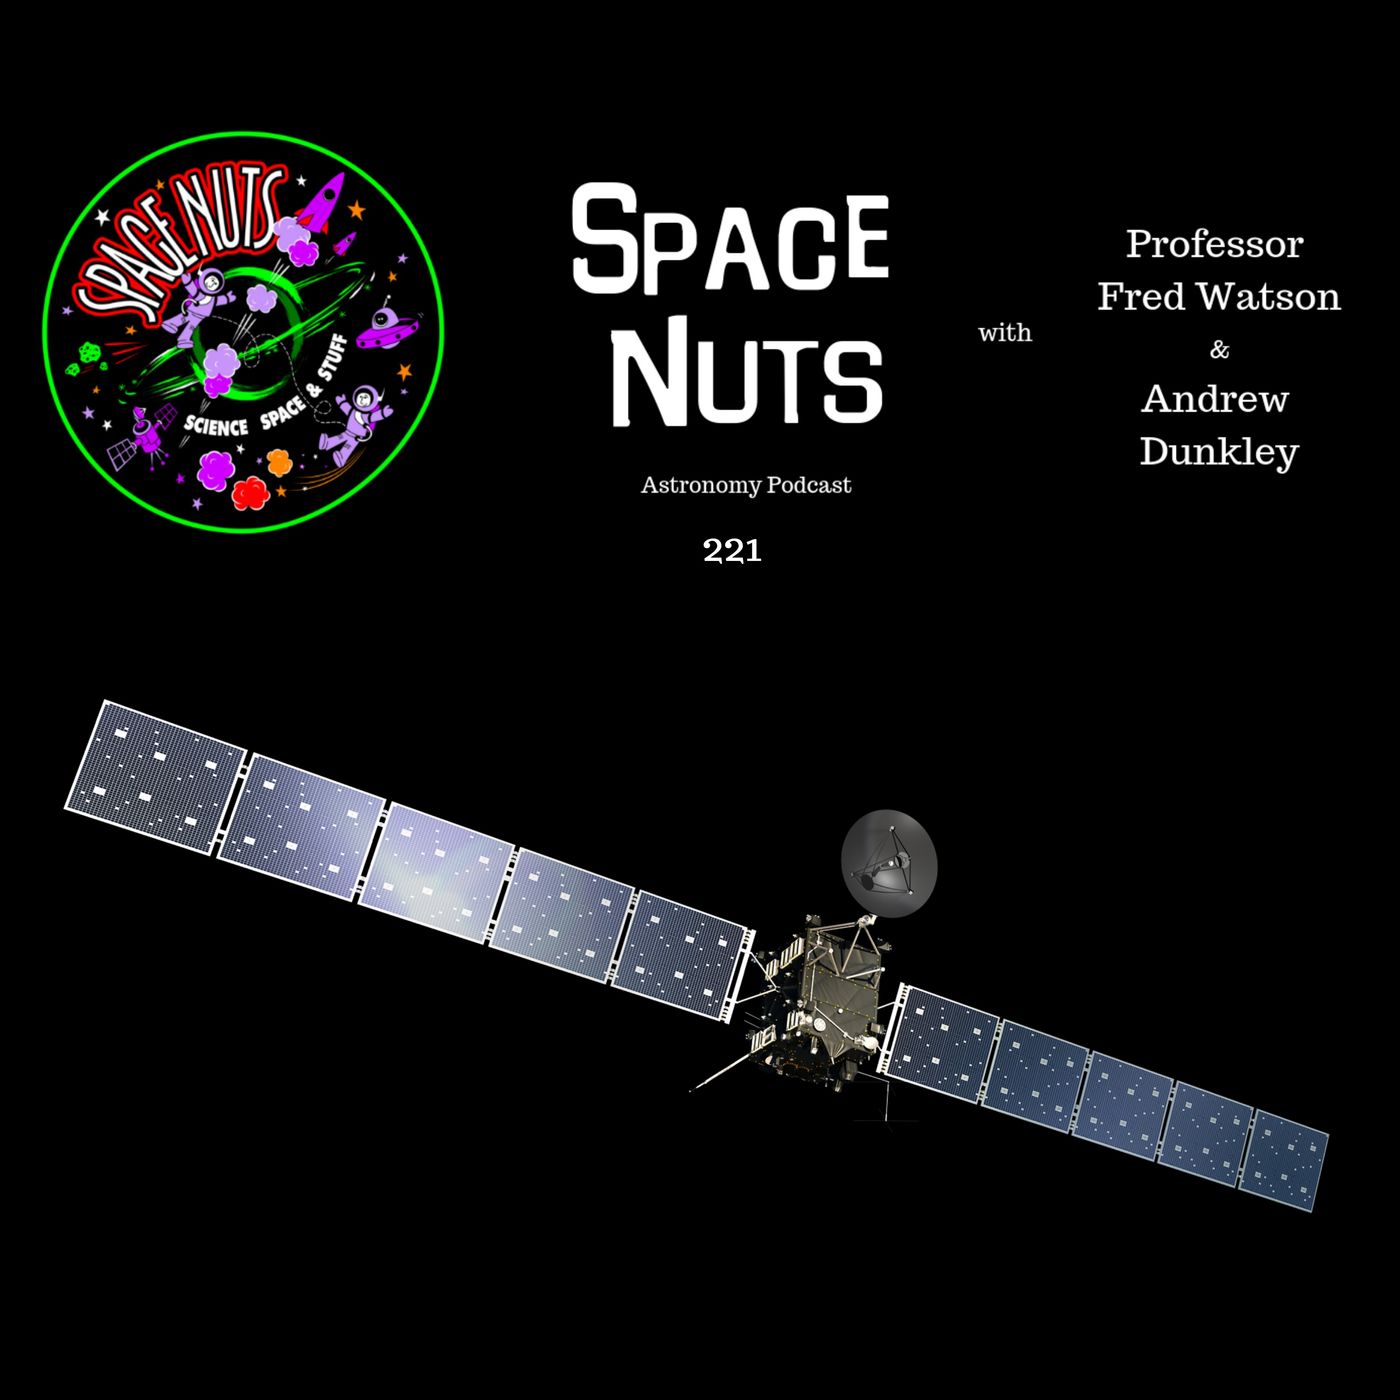 Rosetta Spacecraft - Back In The News